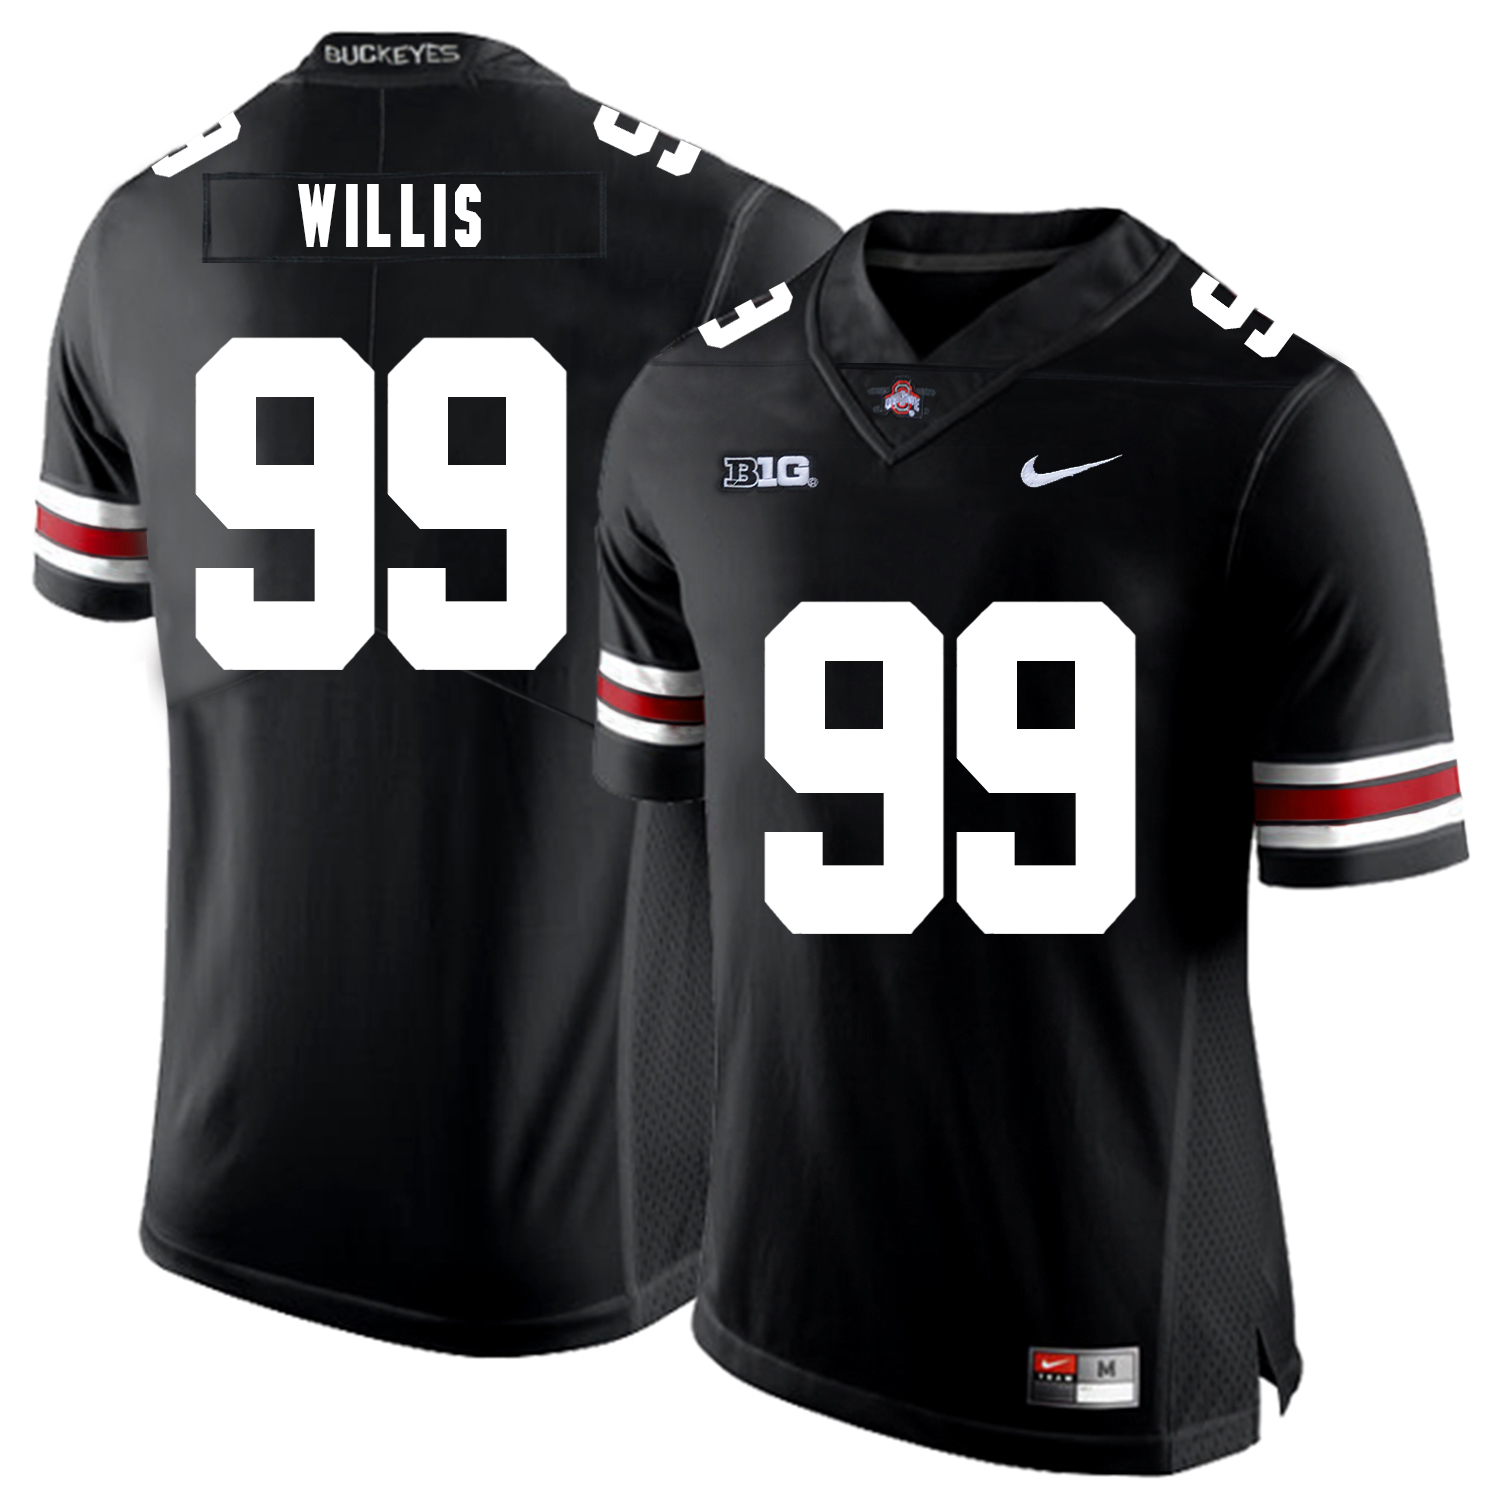 Ohio State Buckeyes 99 Bill Willis Black Nike College Football Jersey